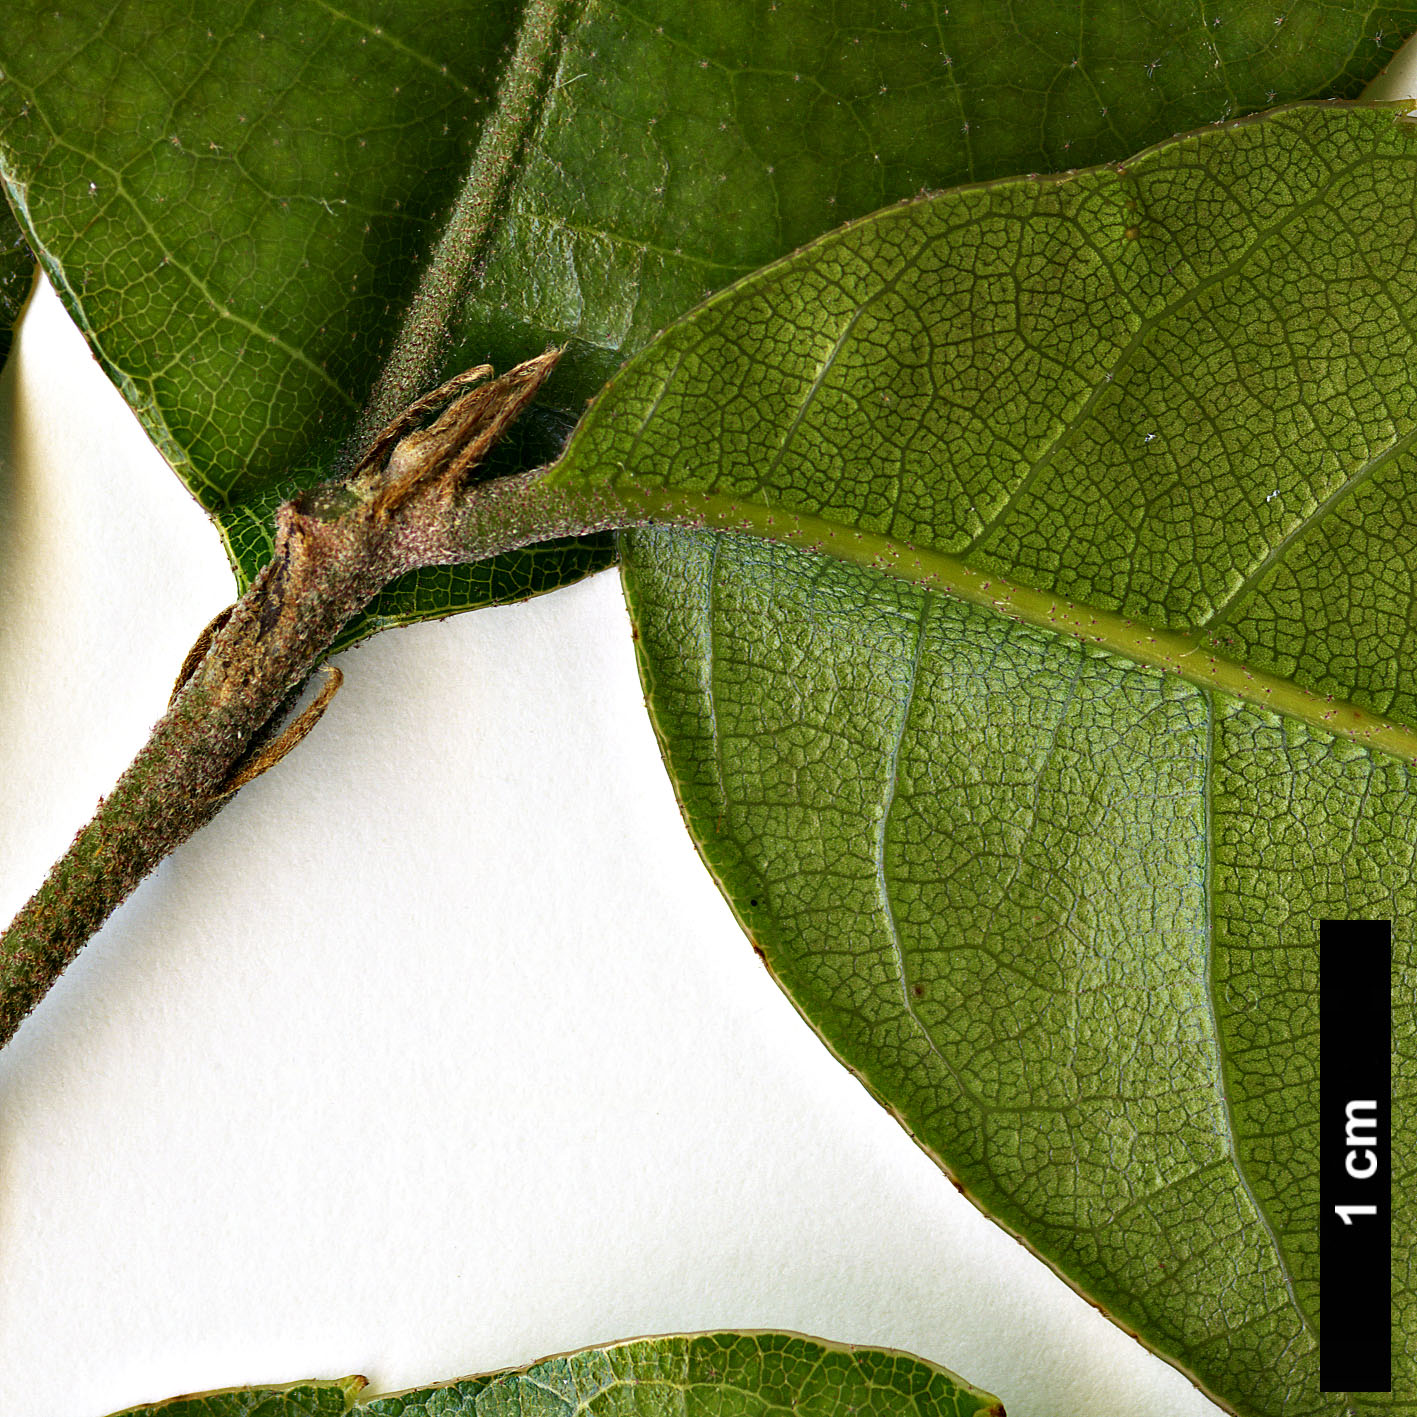 High resolution image: Family: Fagaceae - Genus: Quercus - Taxon: utilis